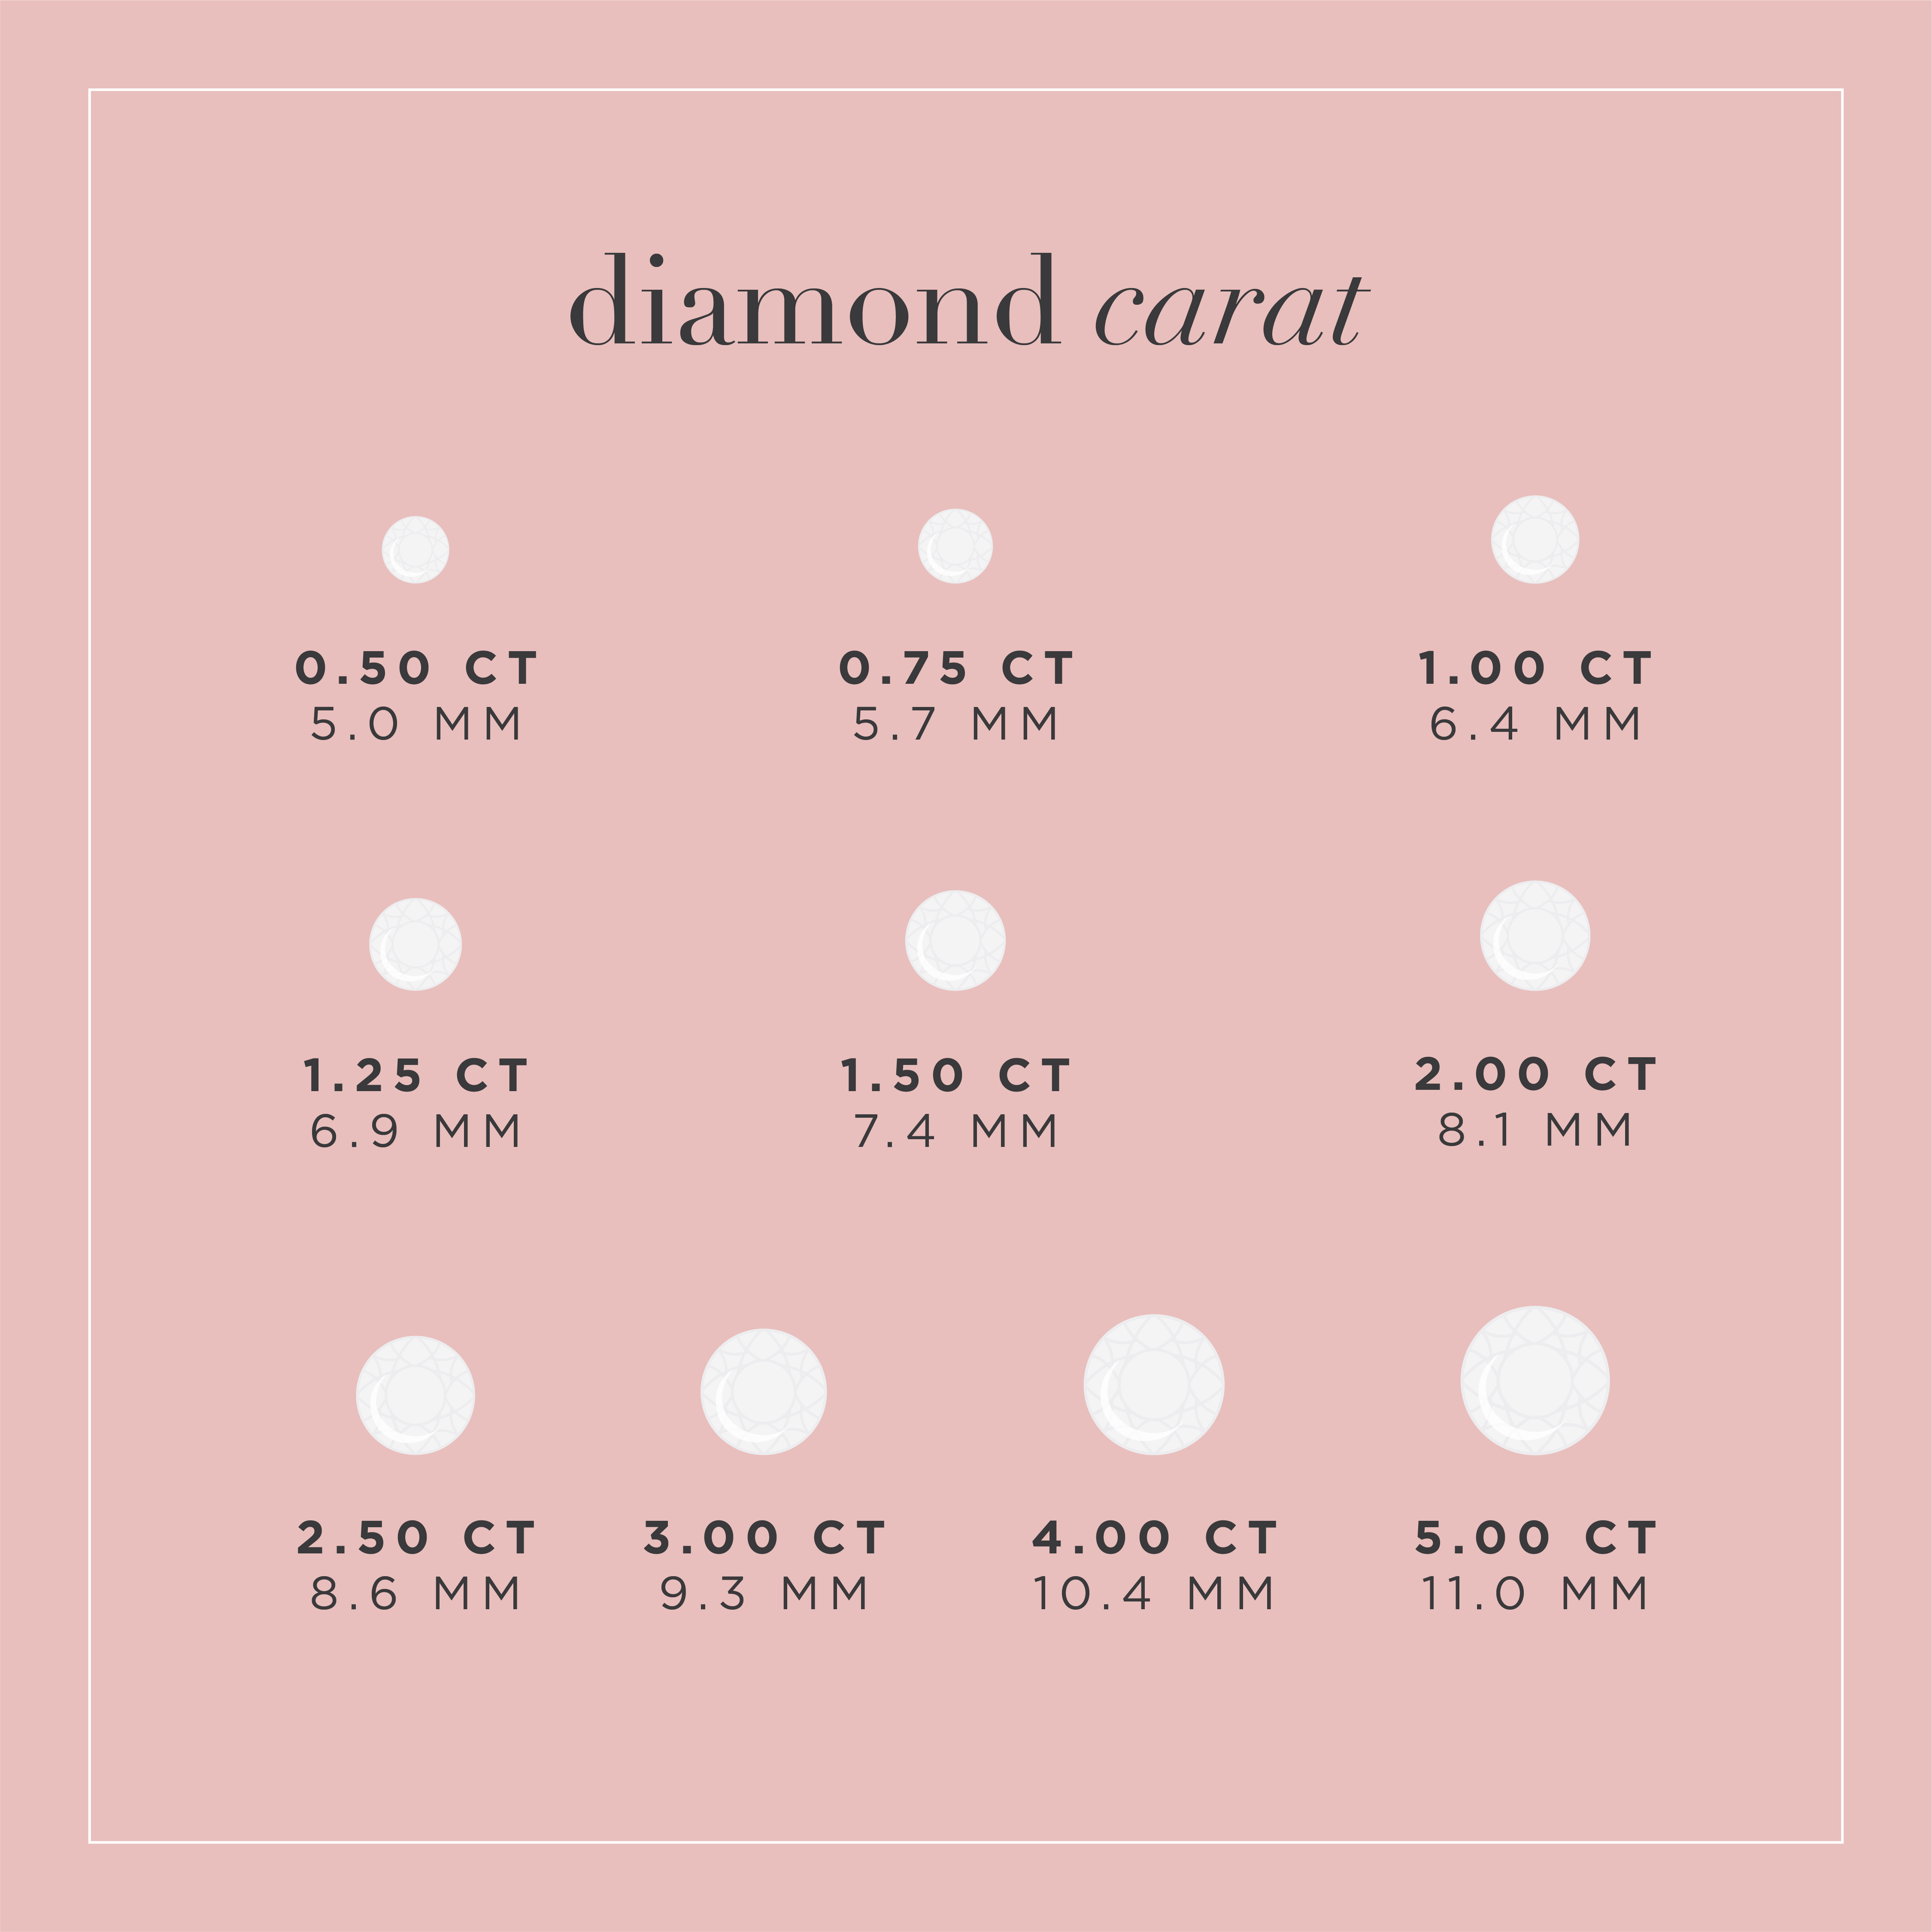 diamond carat guide